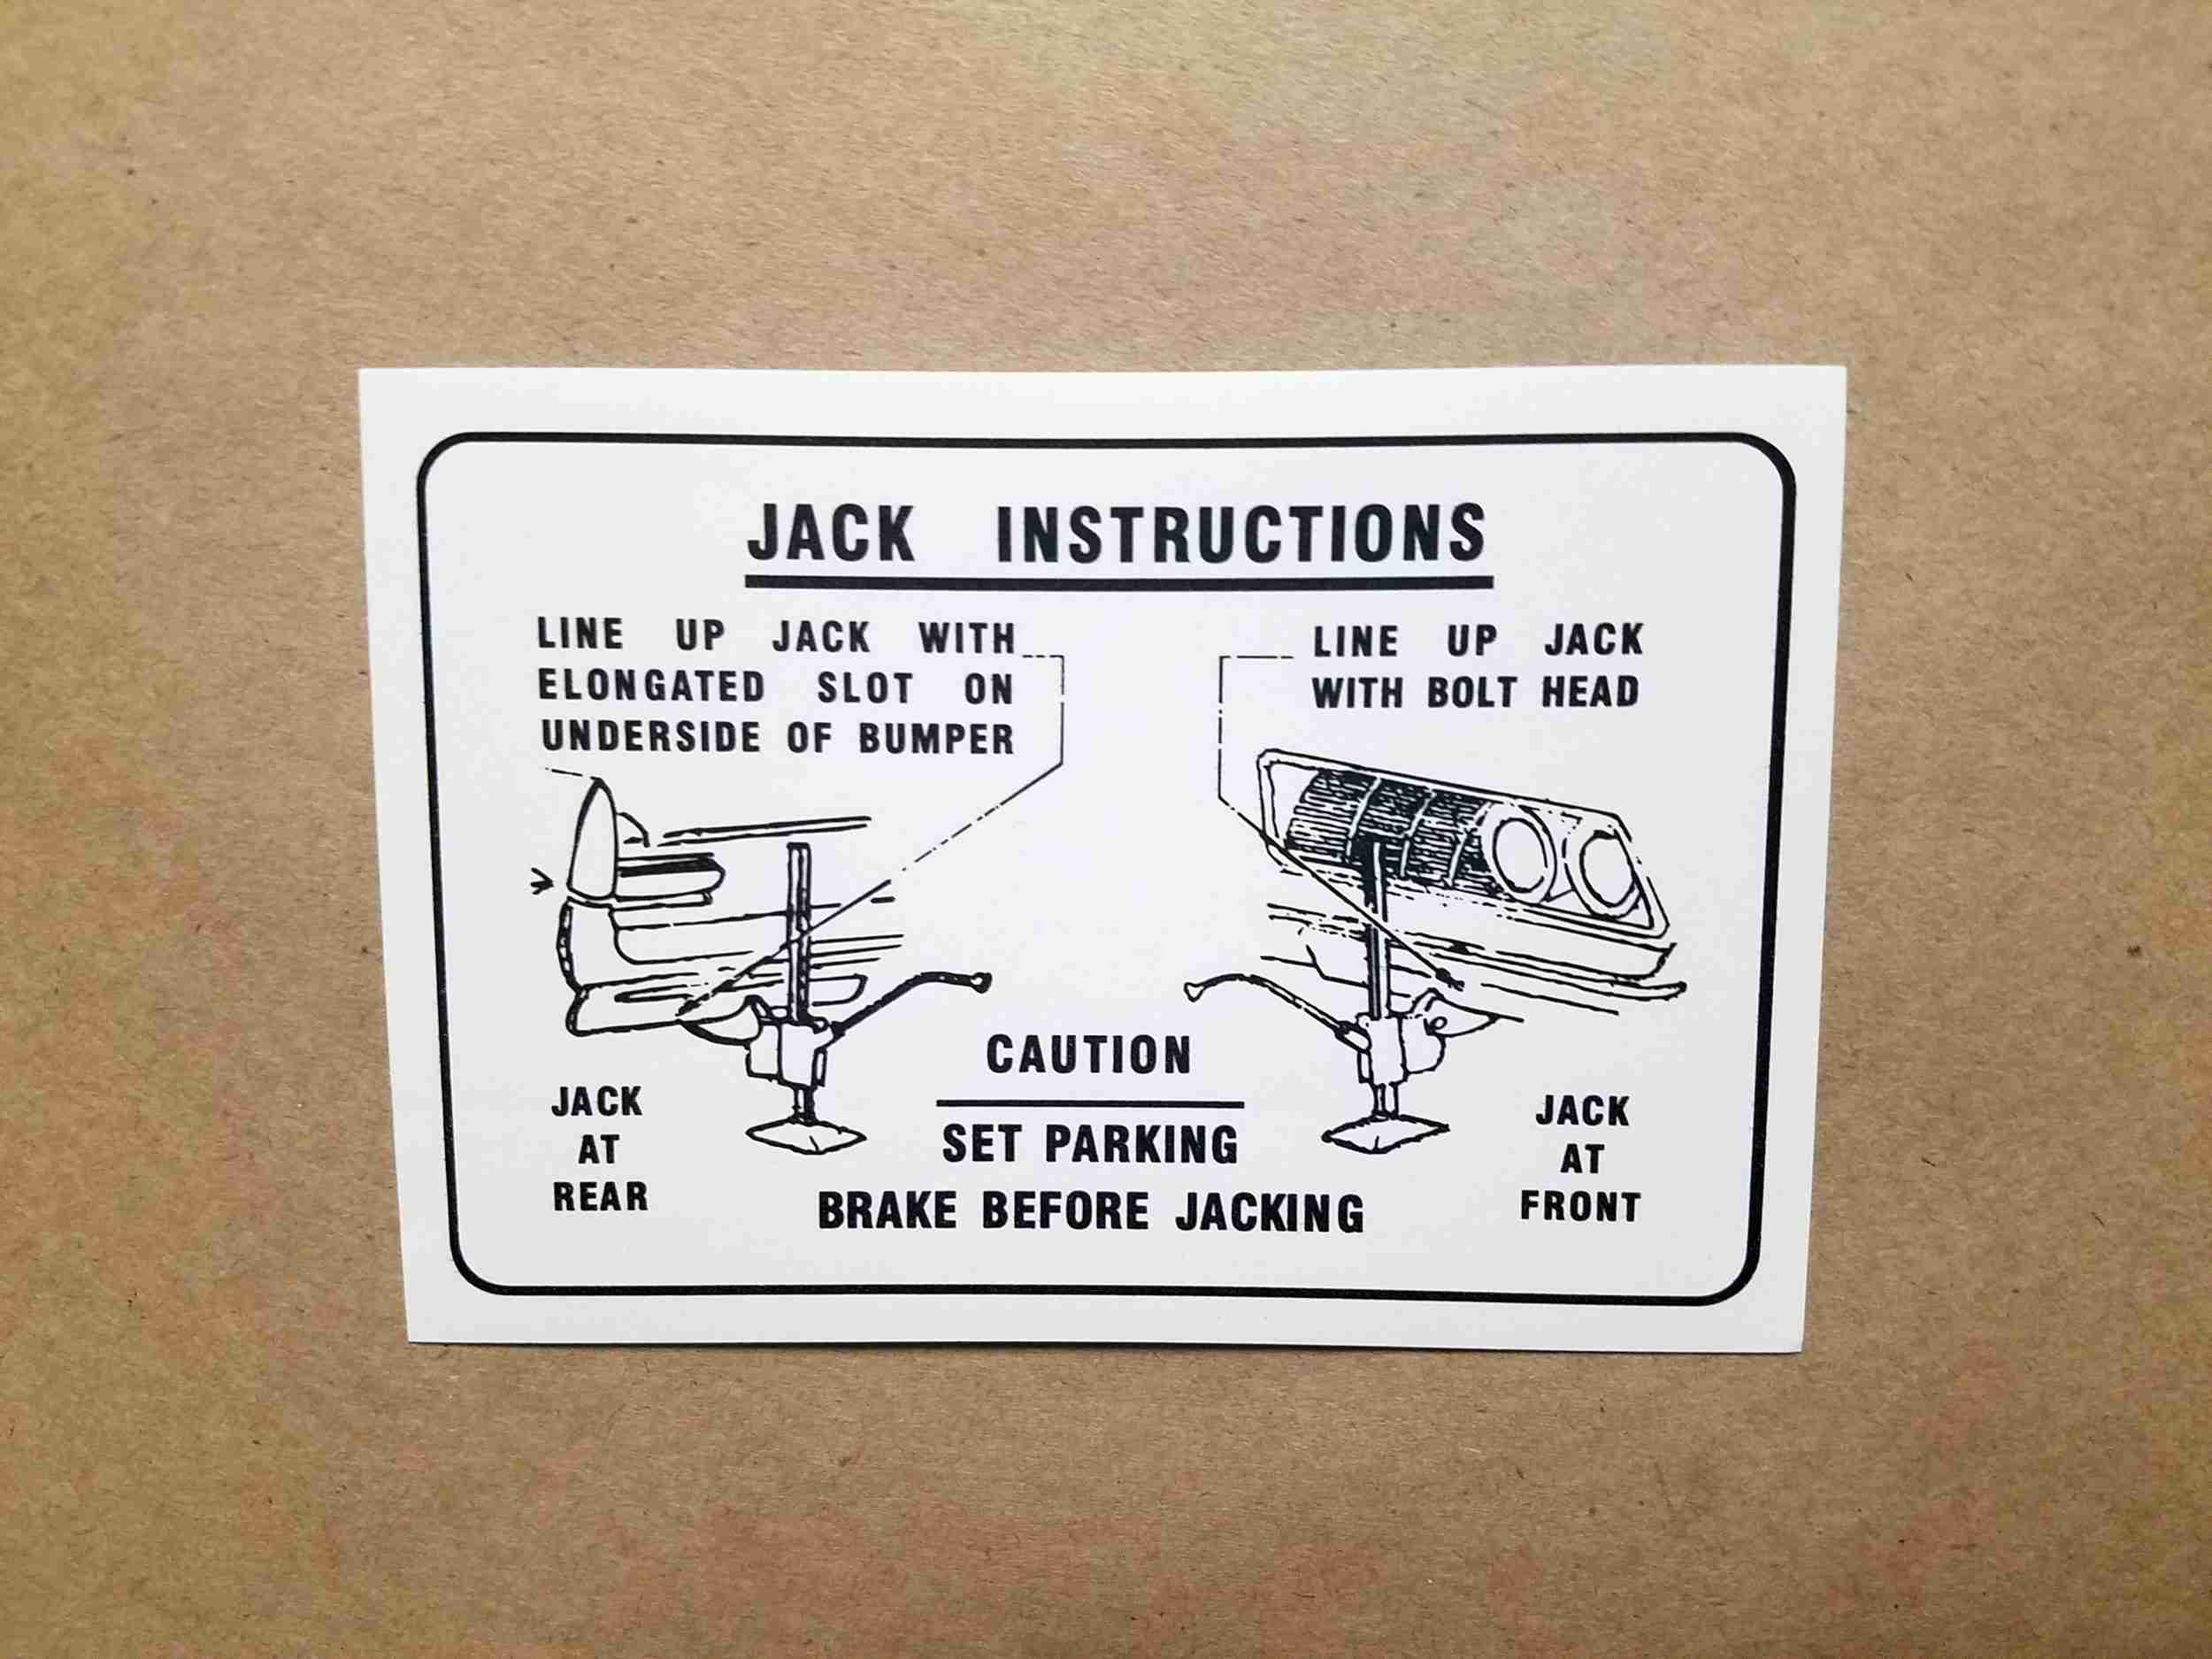 1961 Jack Instructions, Pontiac